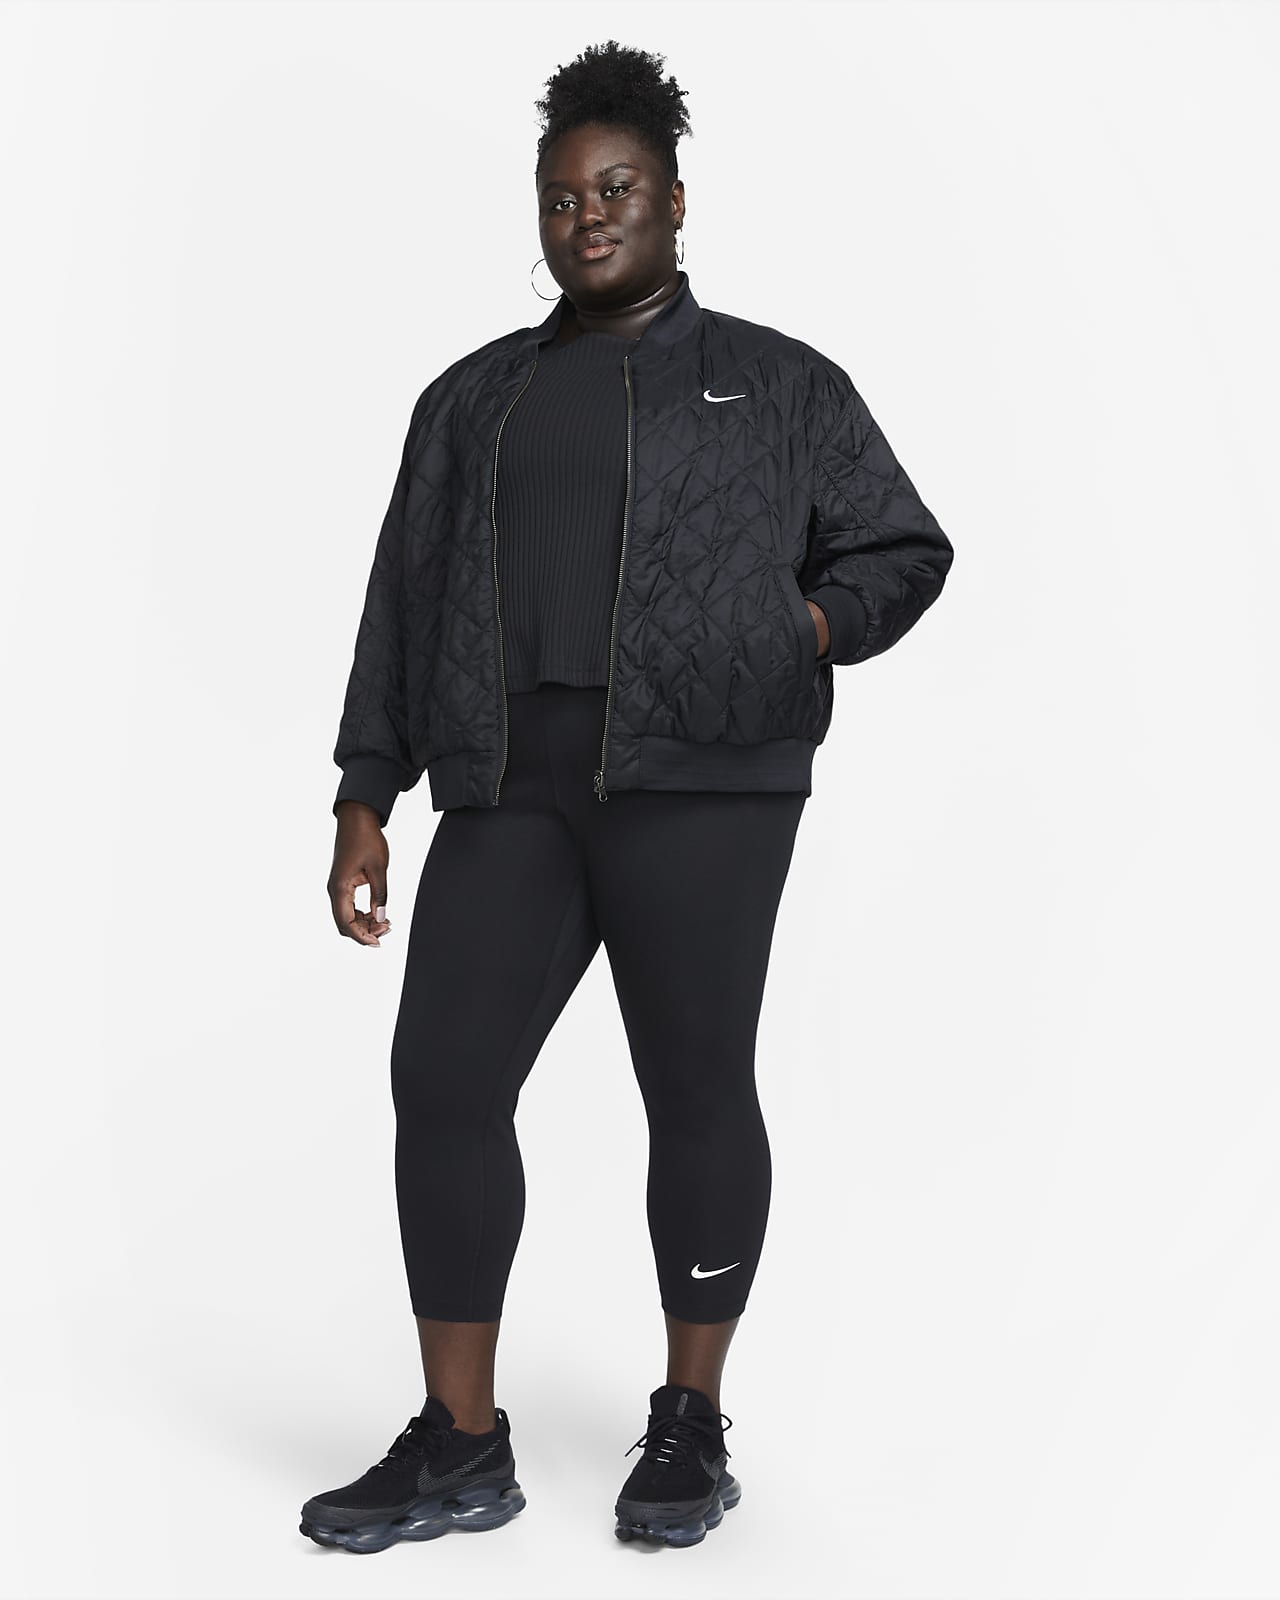 Nike Womens Highwaist Futura Plus Leggings - Black